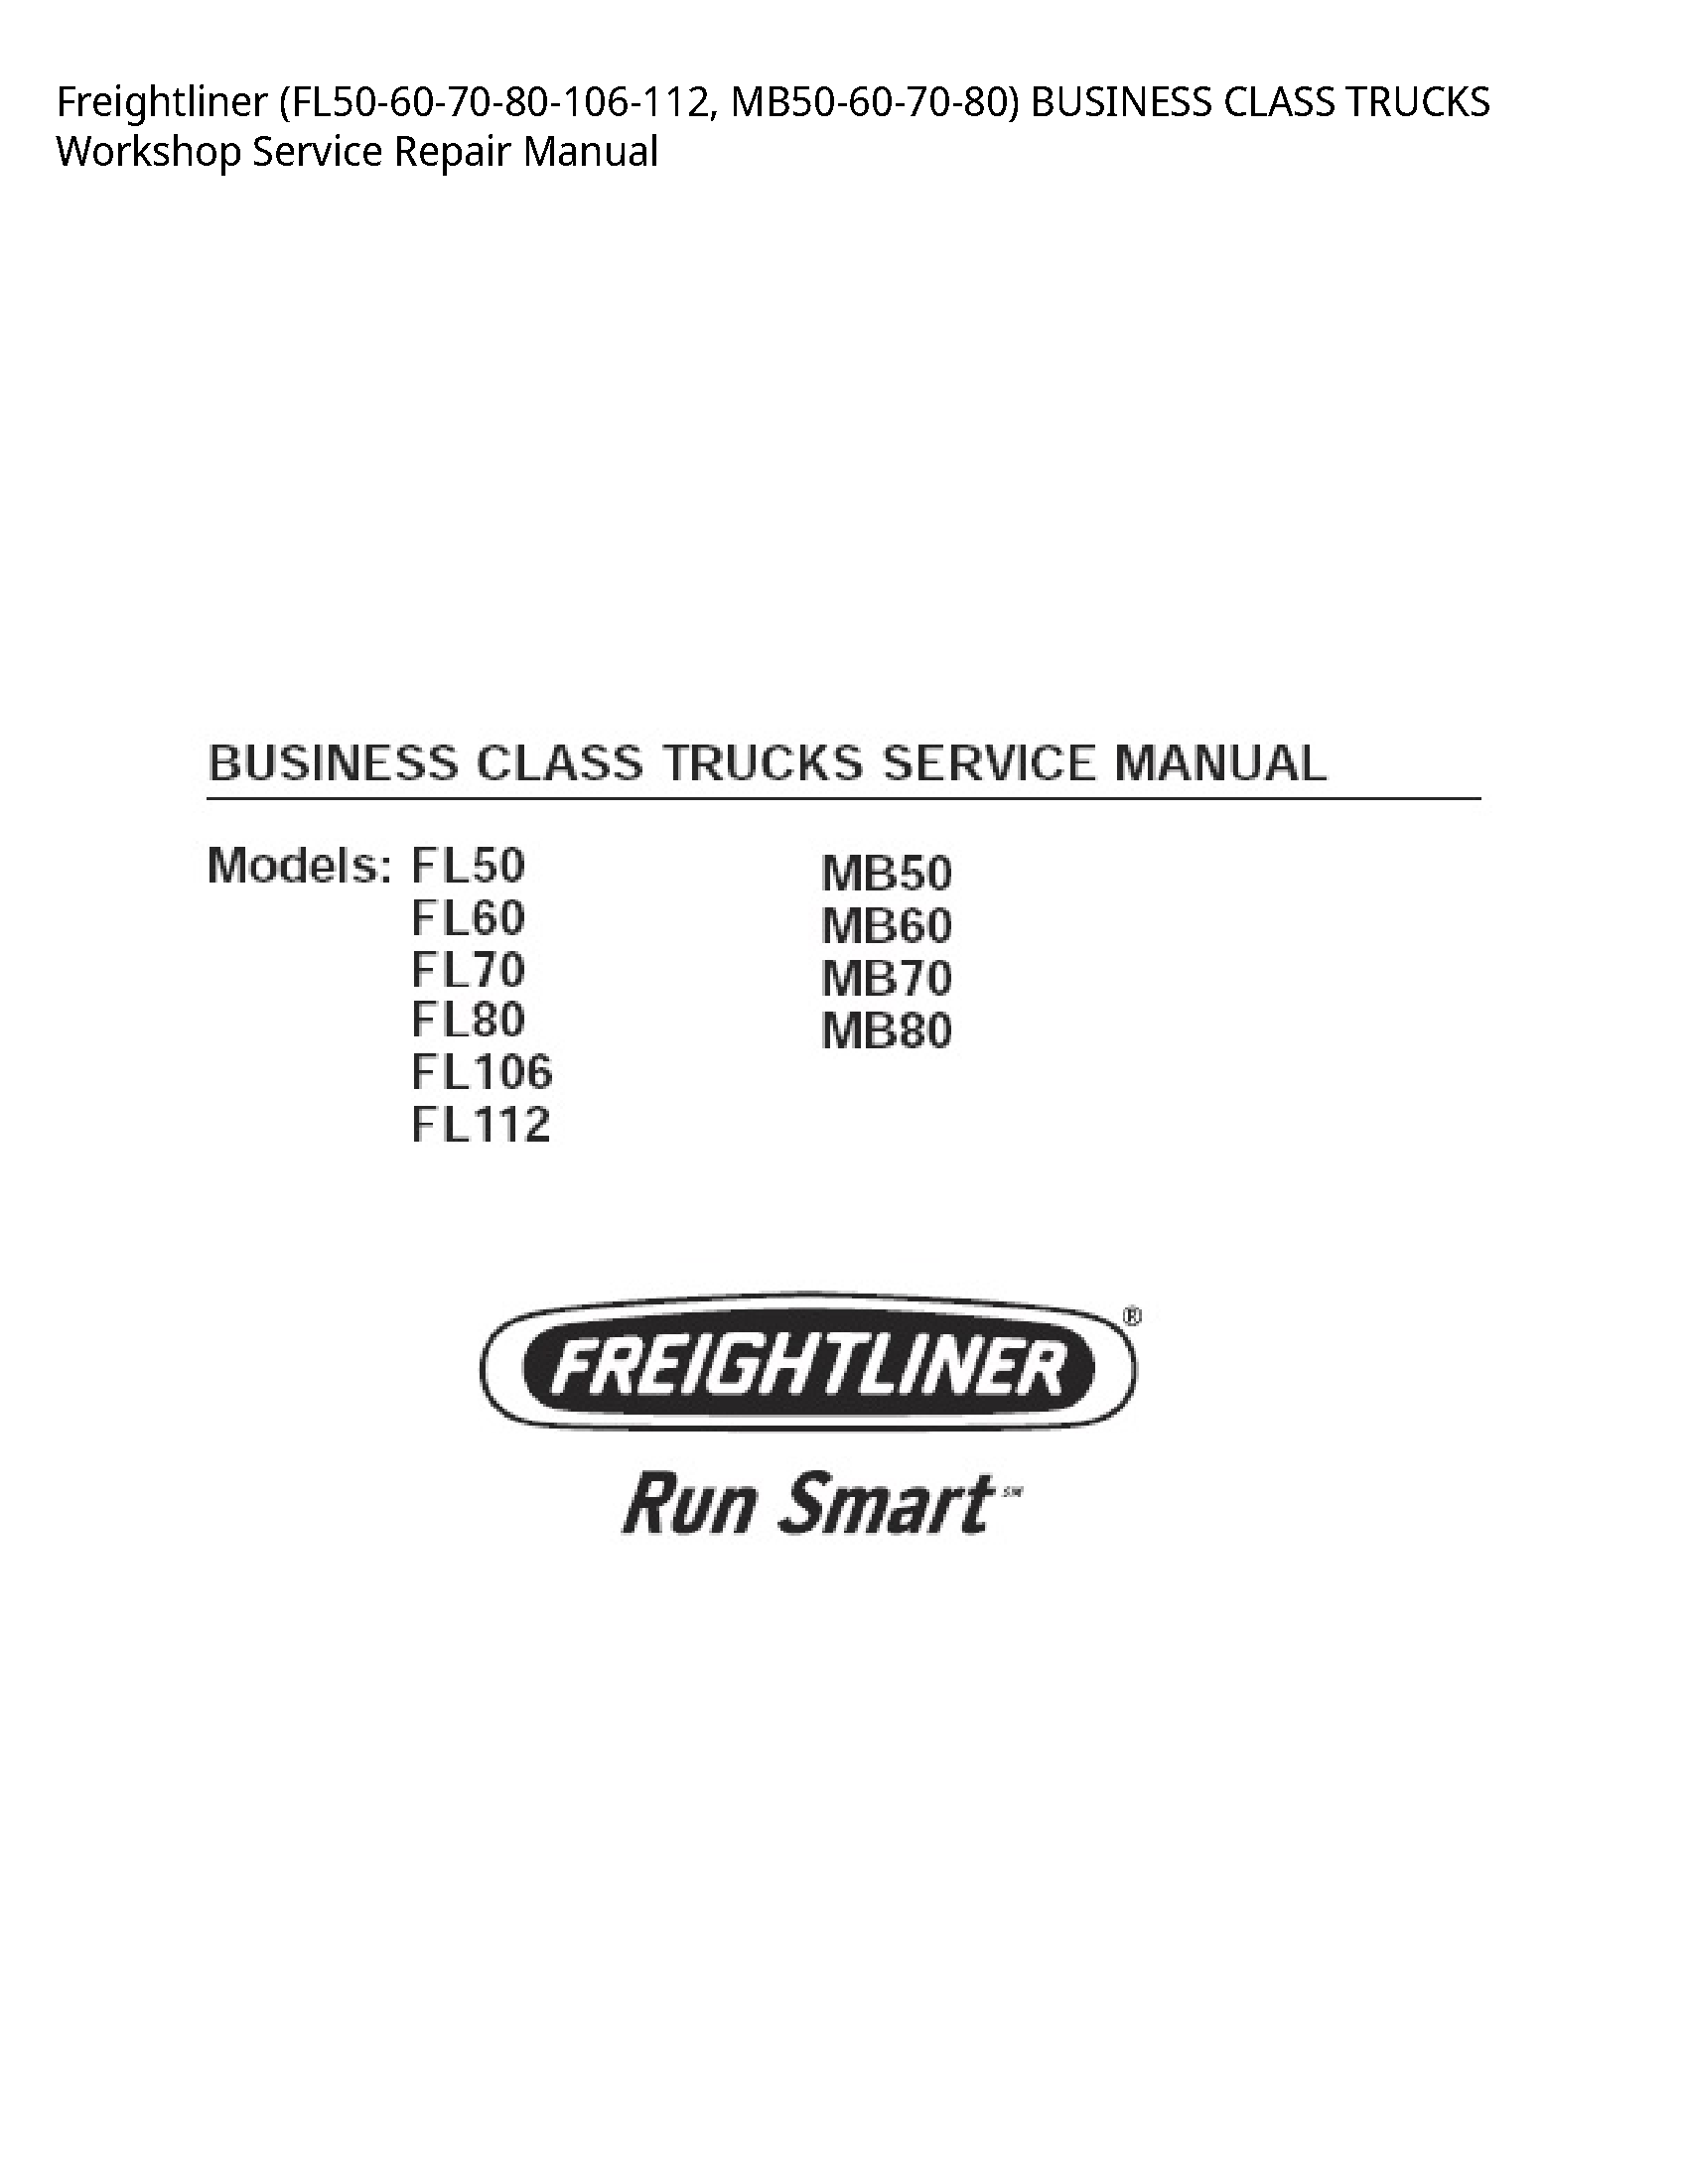 Freightliner (FL50-60-70-80-106-112 BUSINESS CLASS TRUCKS manual